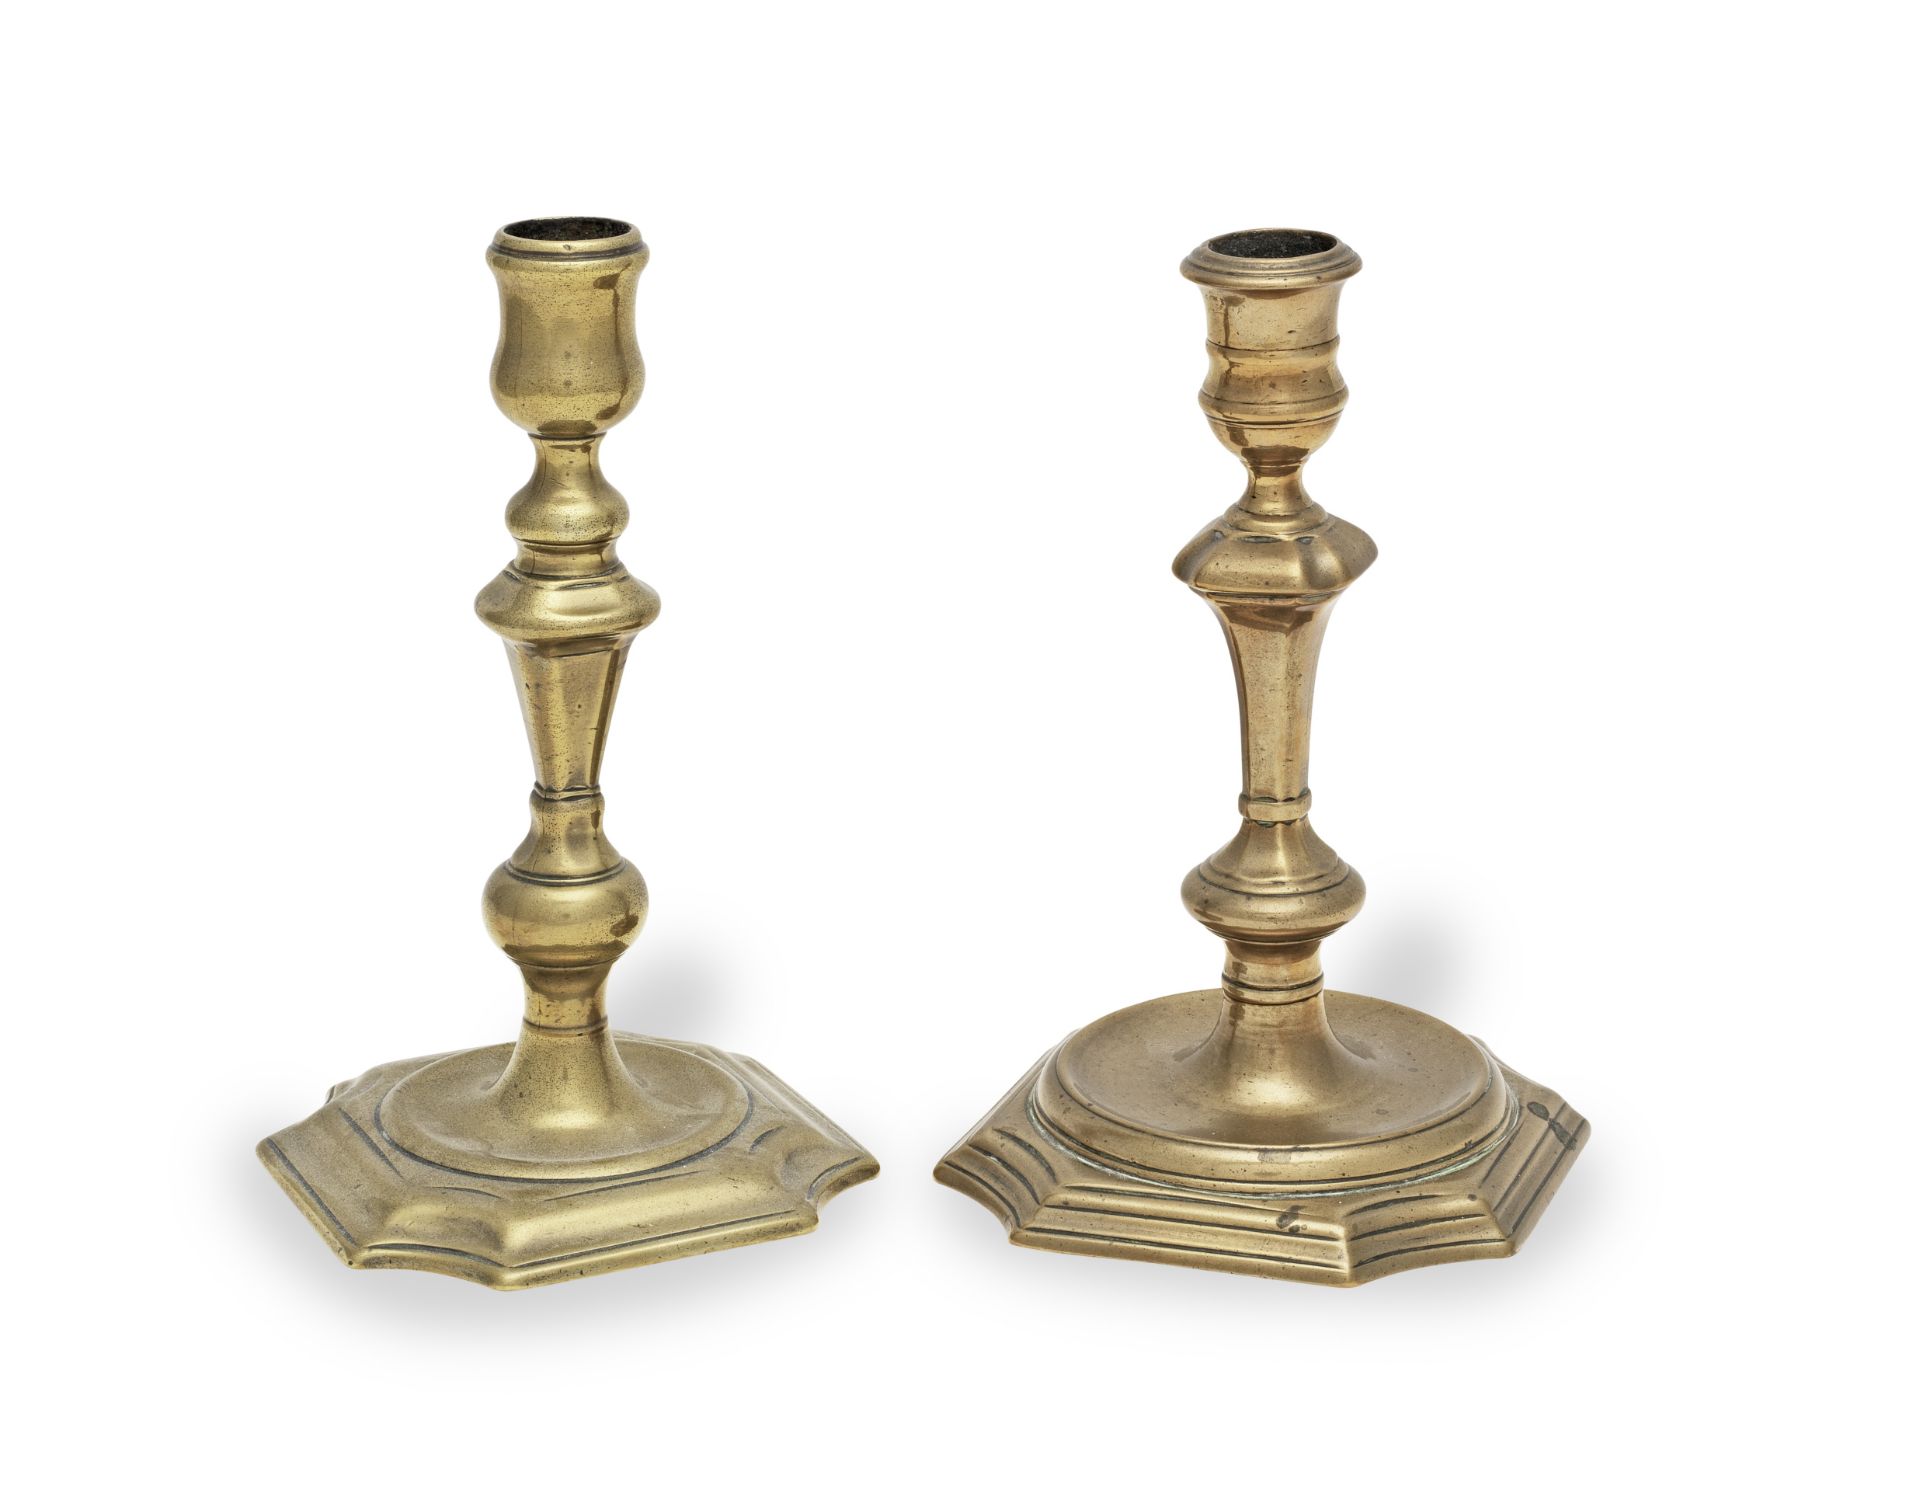 Two brass alloy socket candlesticks, circa 1725-40 (2)